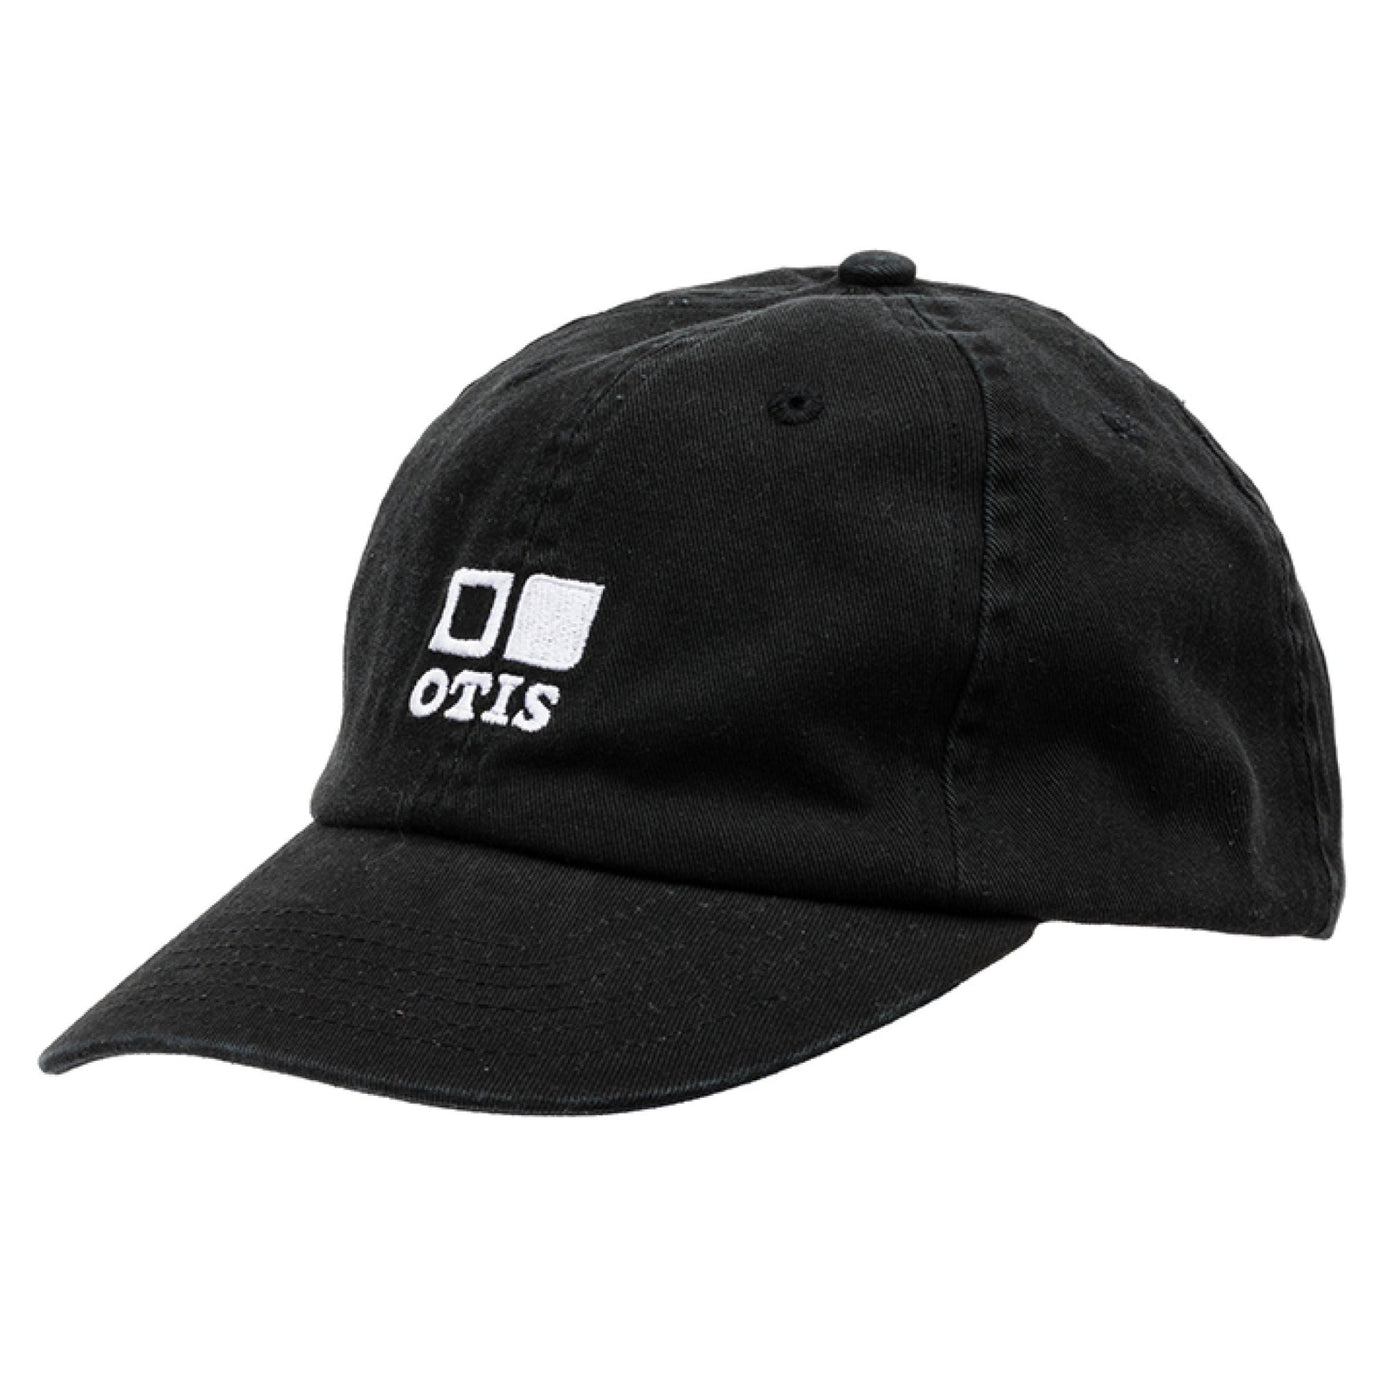 Black and beige cap facing to the side with OTIS Eyewear logo